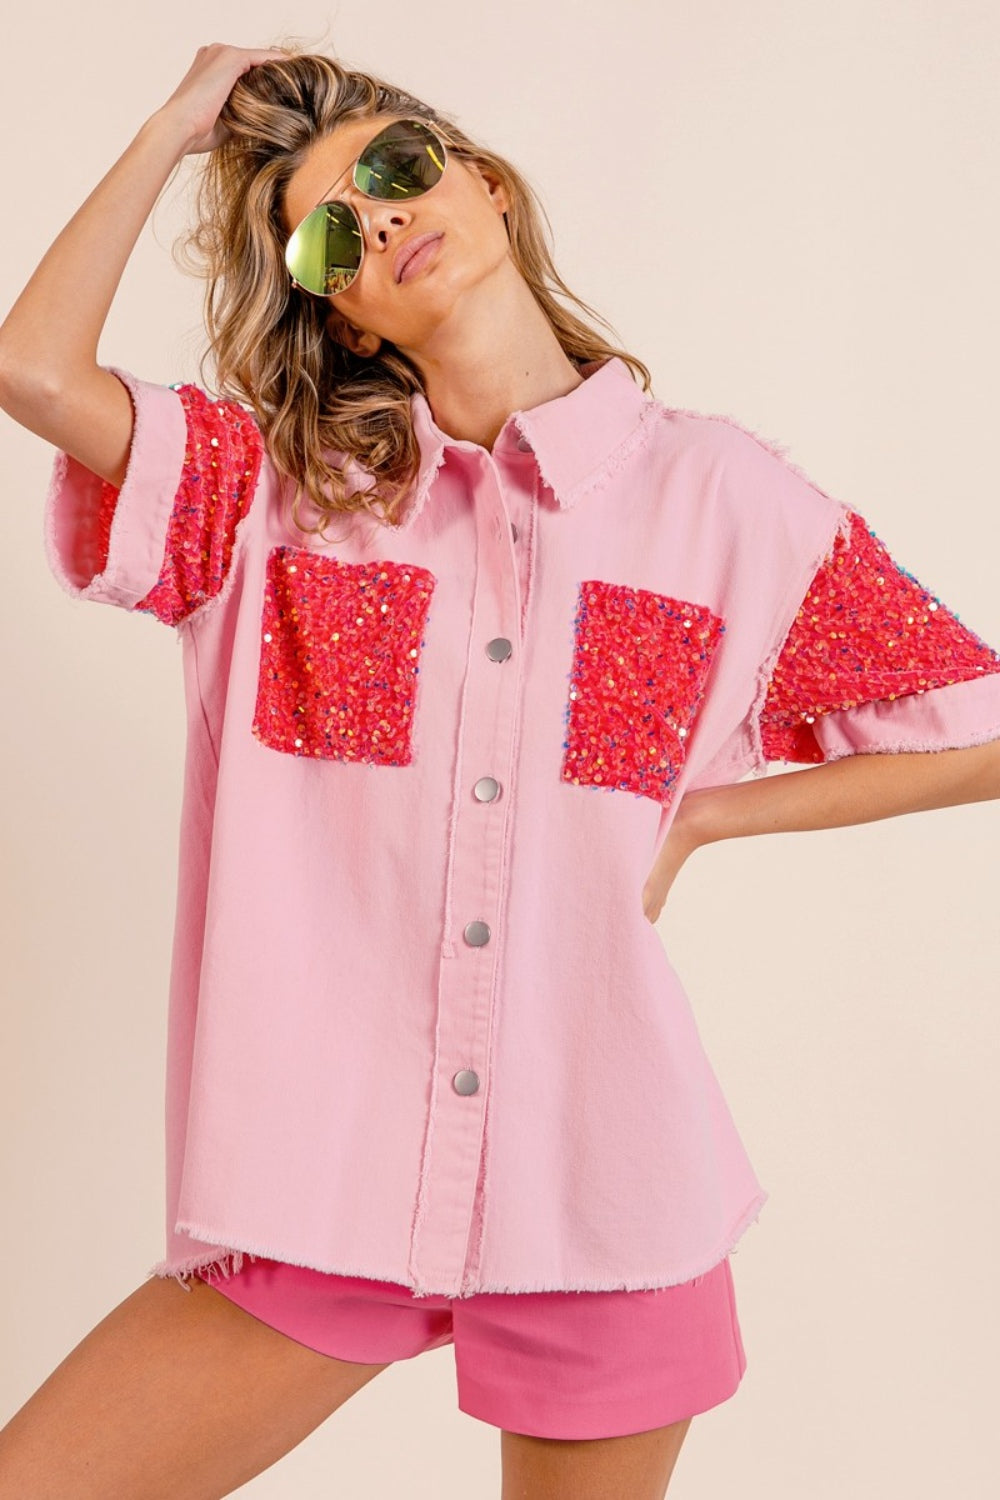 BiBi Colorblock Sequin Embellished Raw Hem Short Sleeve Top